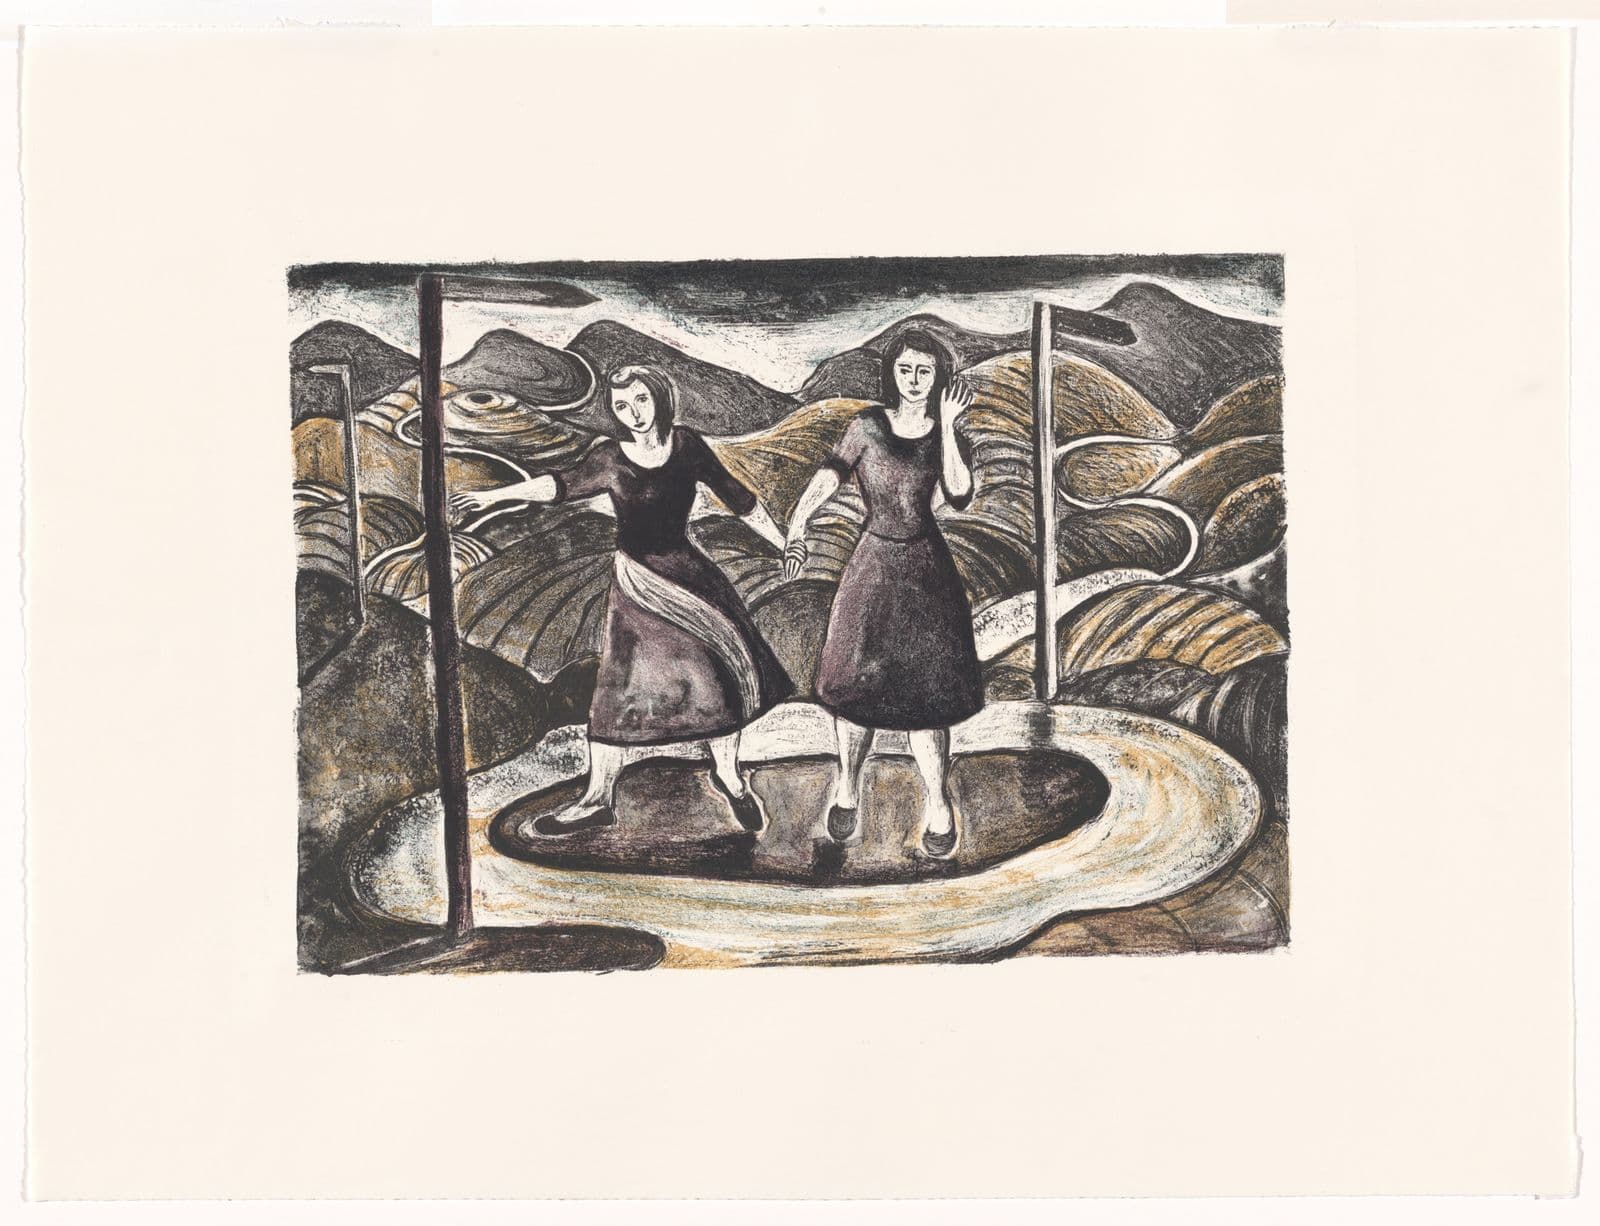 Print of two women in a landscape